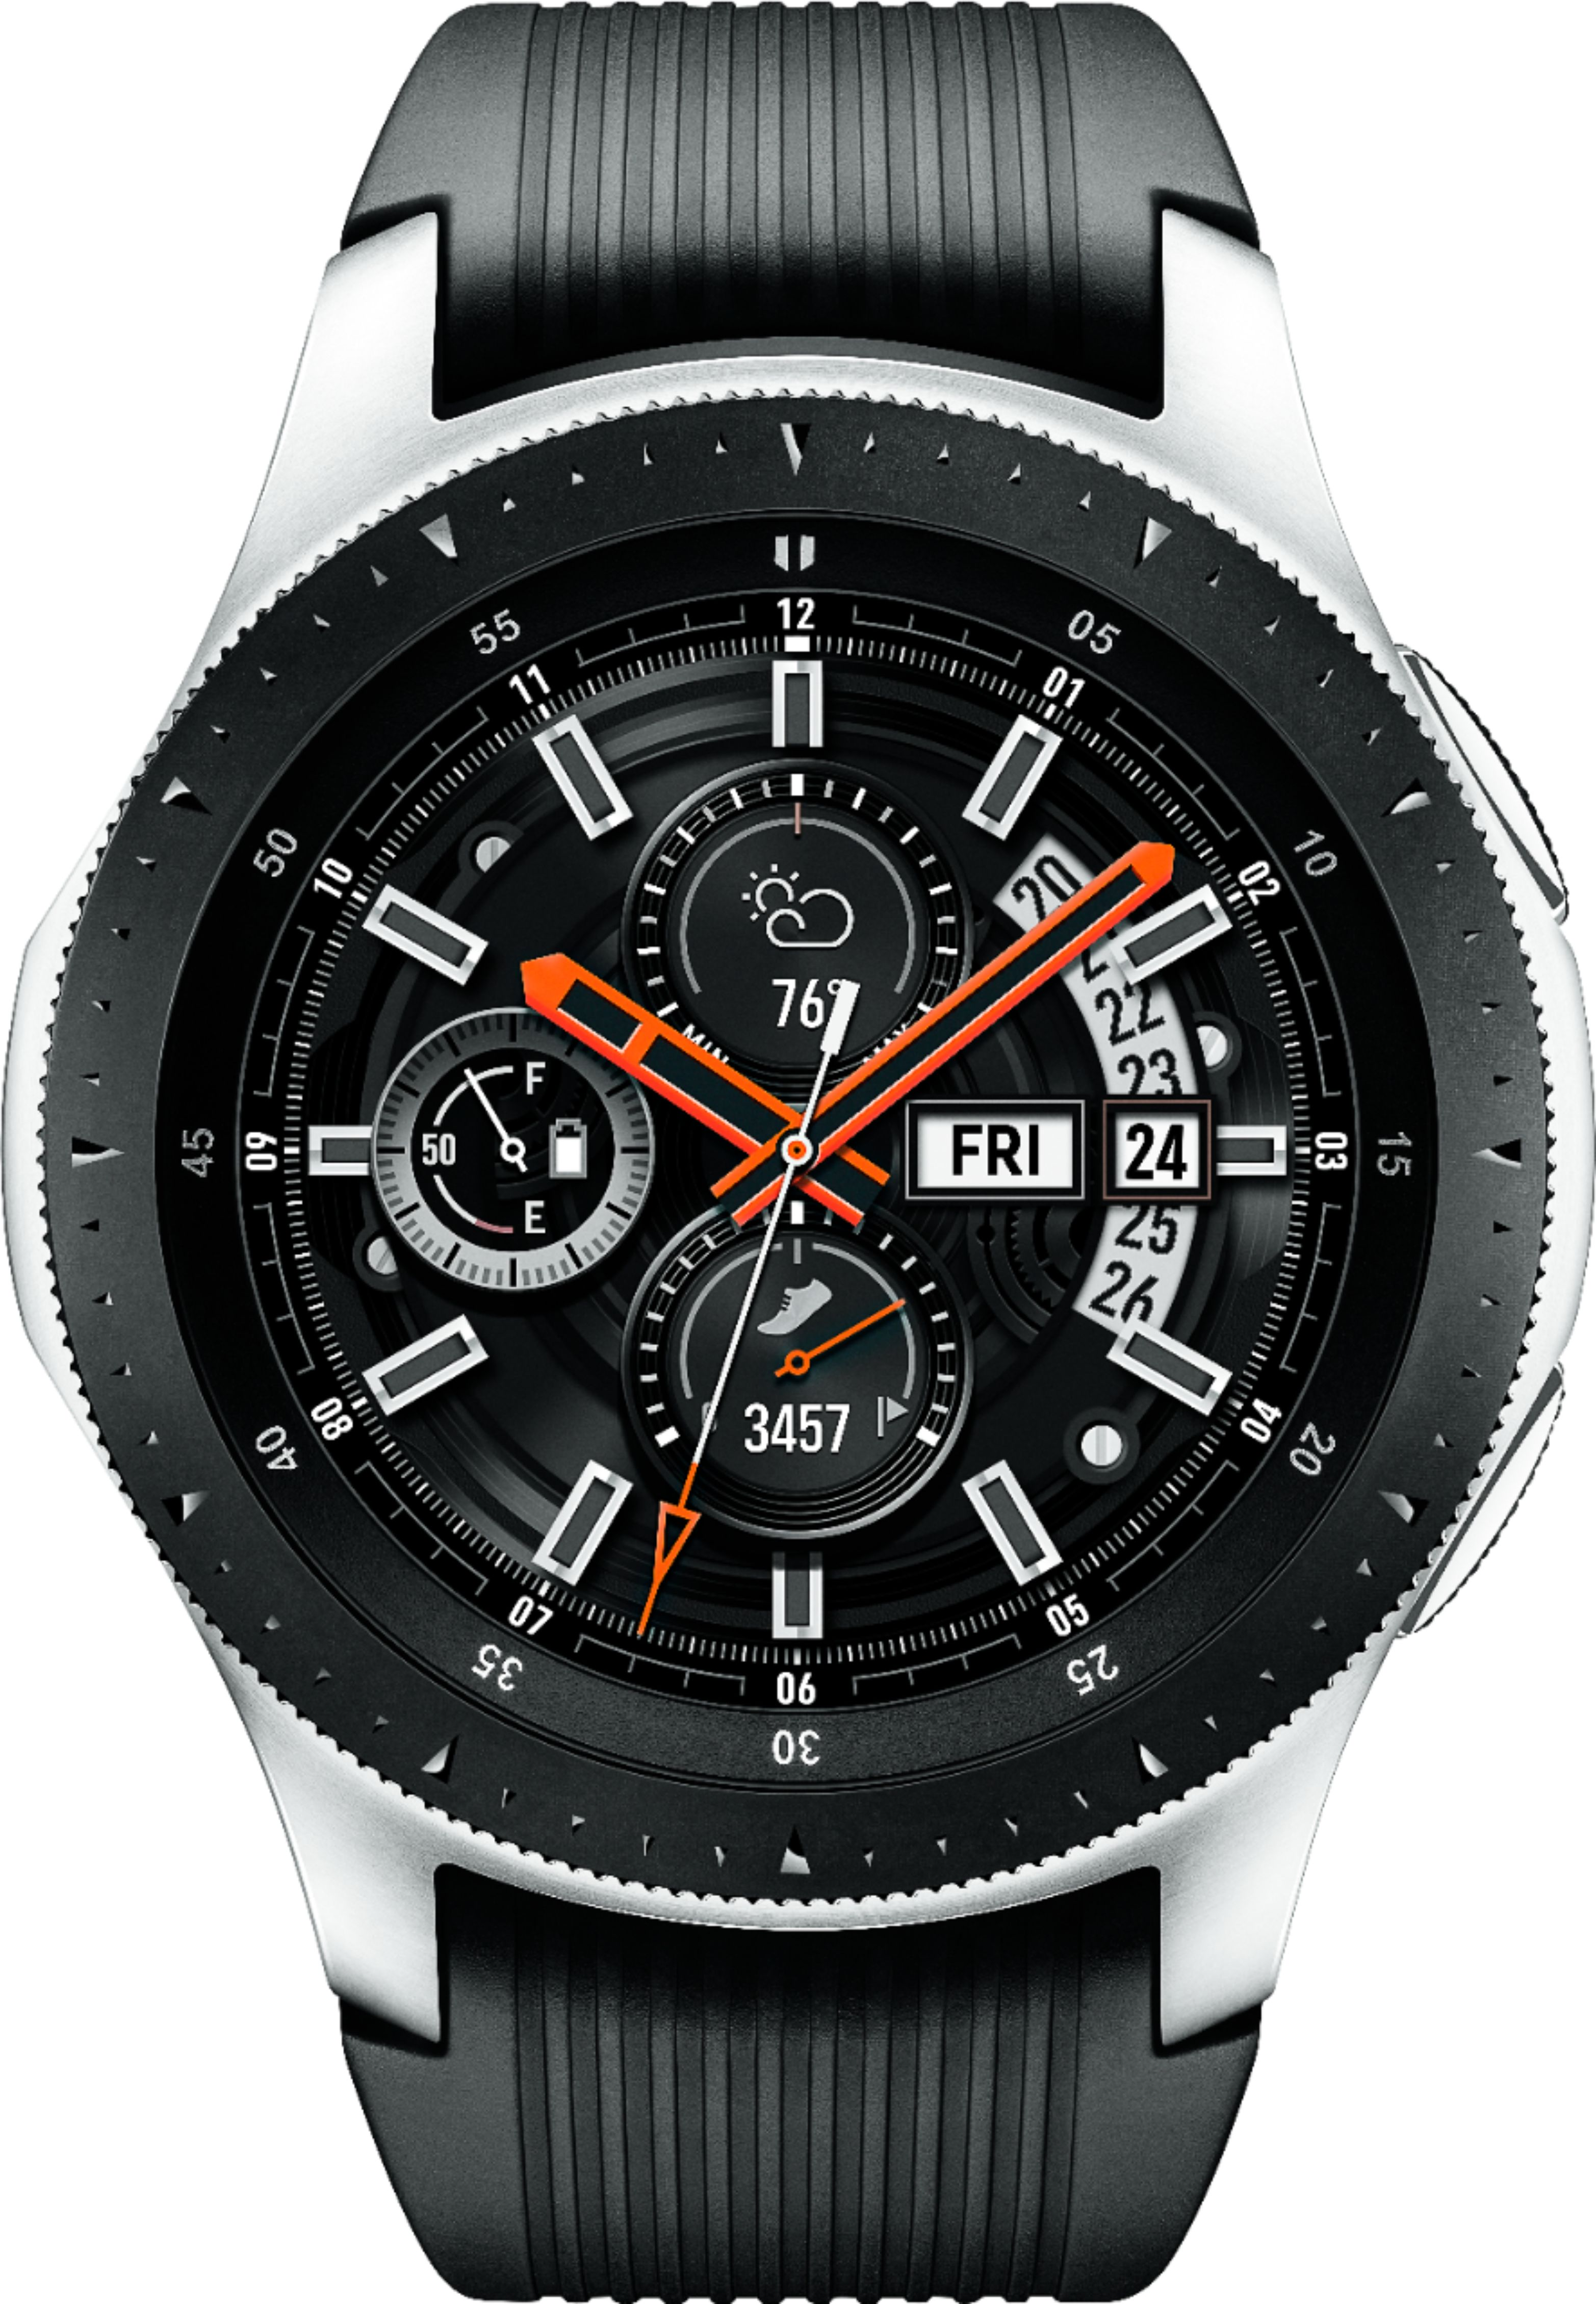 Samsung Geek Squad Certified Refurbished Galaxy Watch Smartwatch 46mm Stainless Steel Silver GSRF SM-R800NZSAXAR - Best Buy $139.99